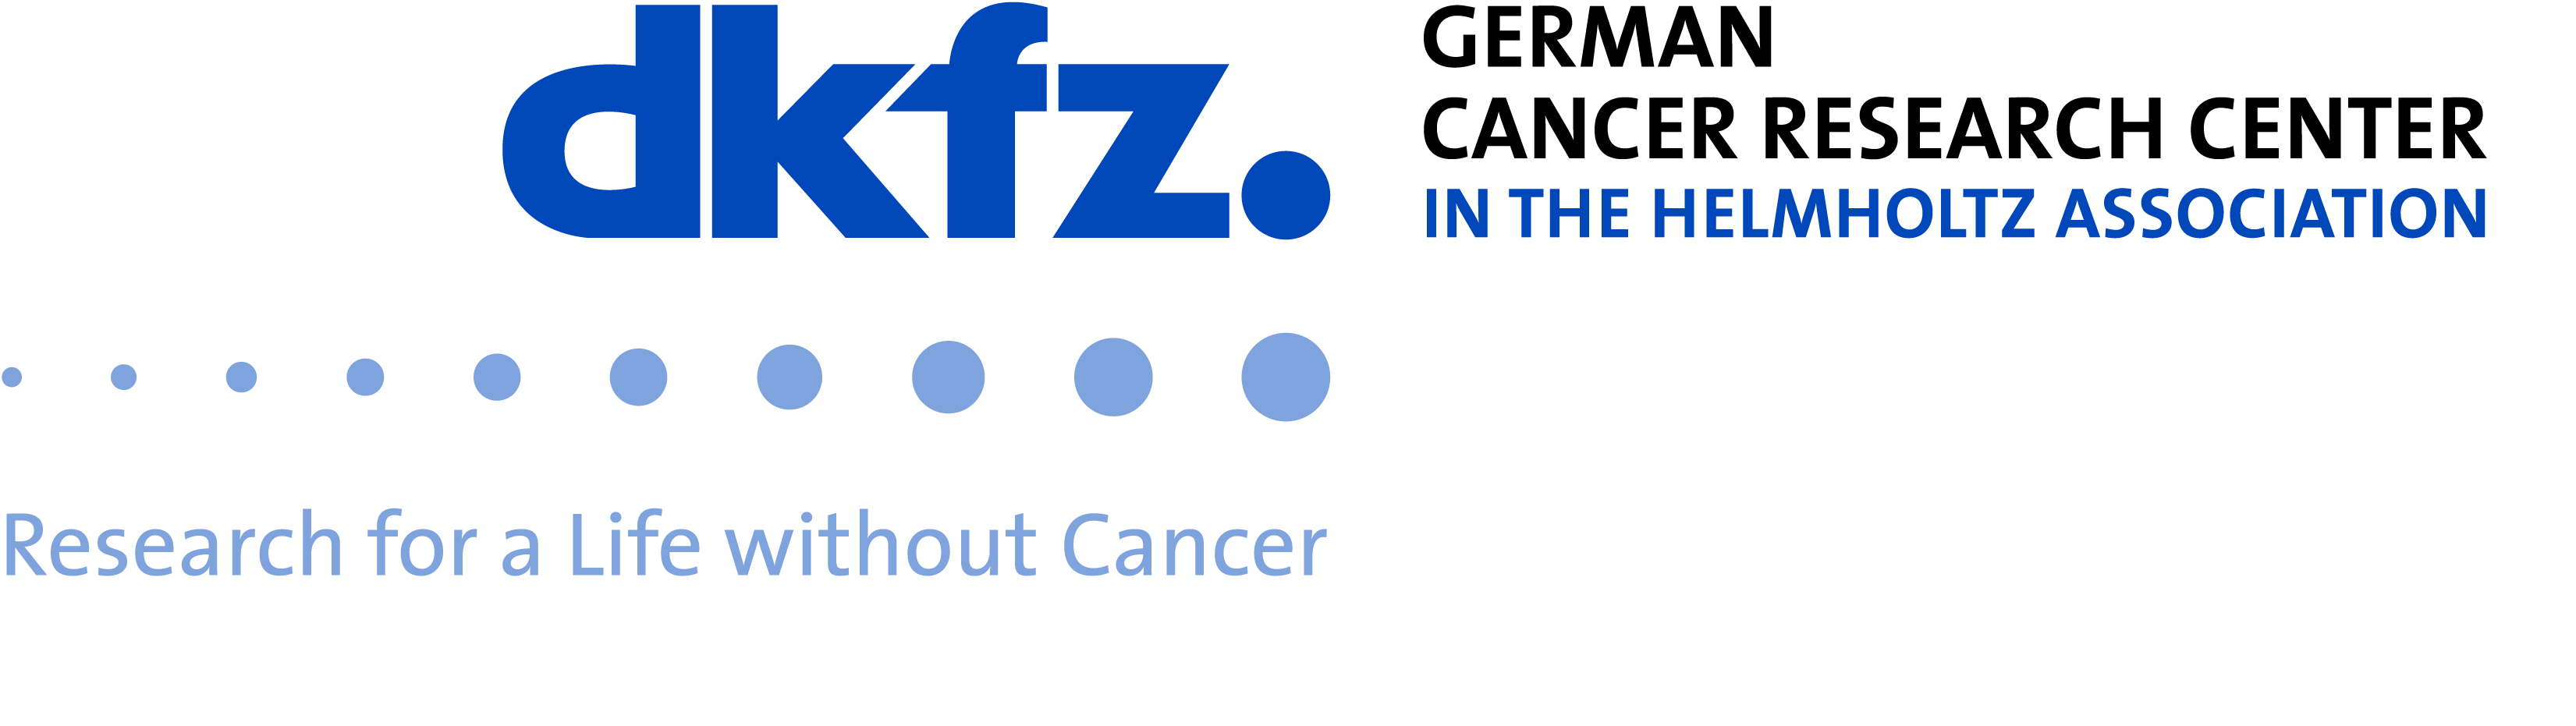 DKFZ_Logo.png